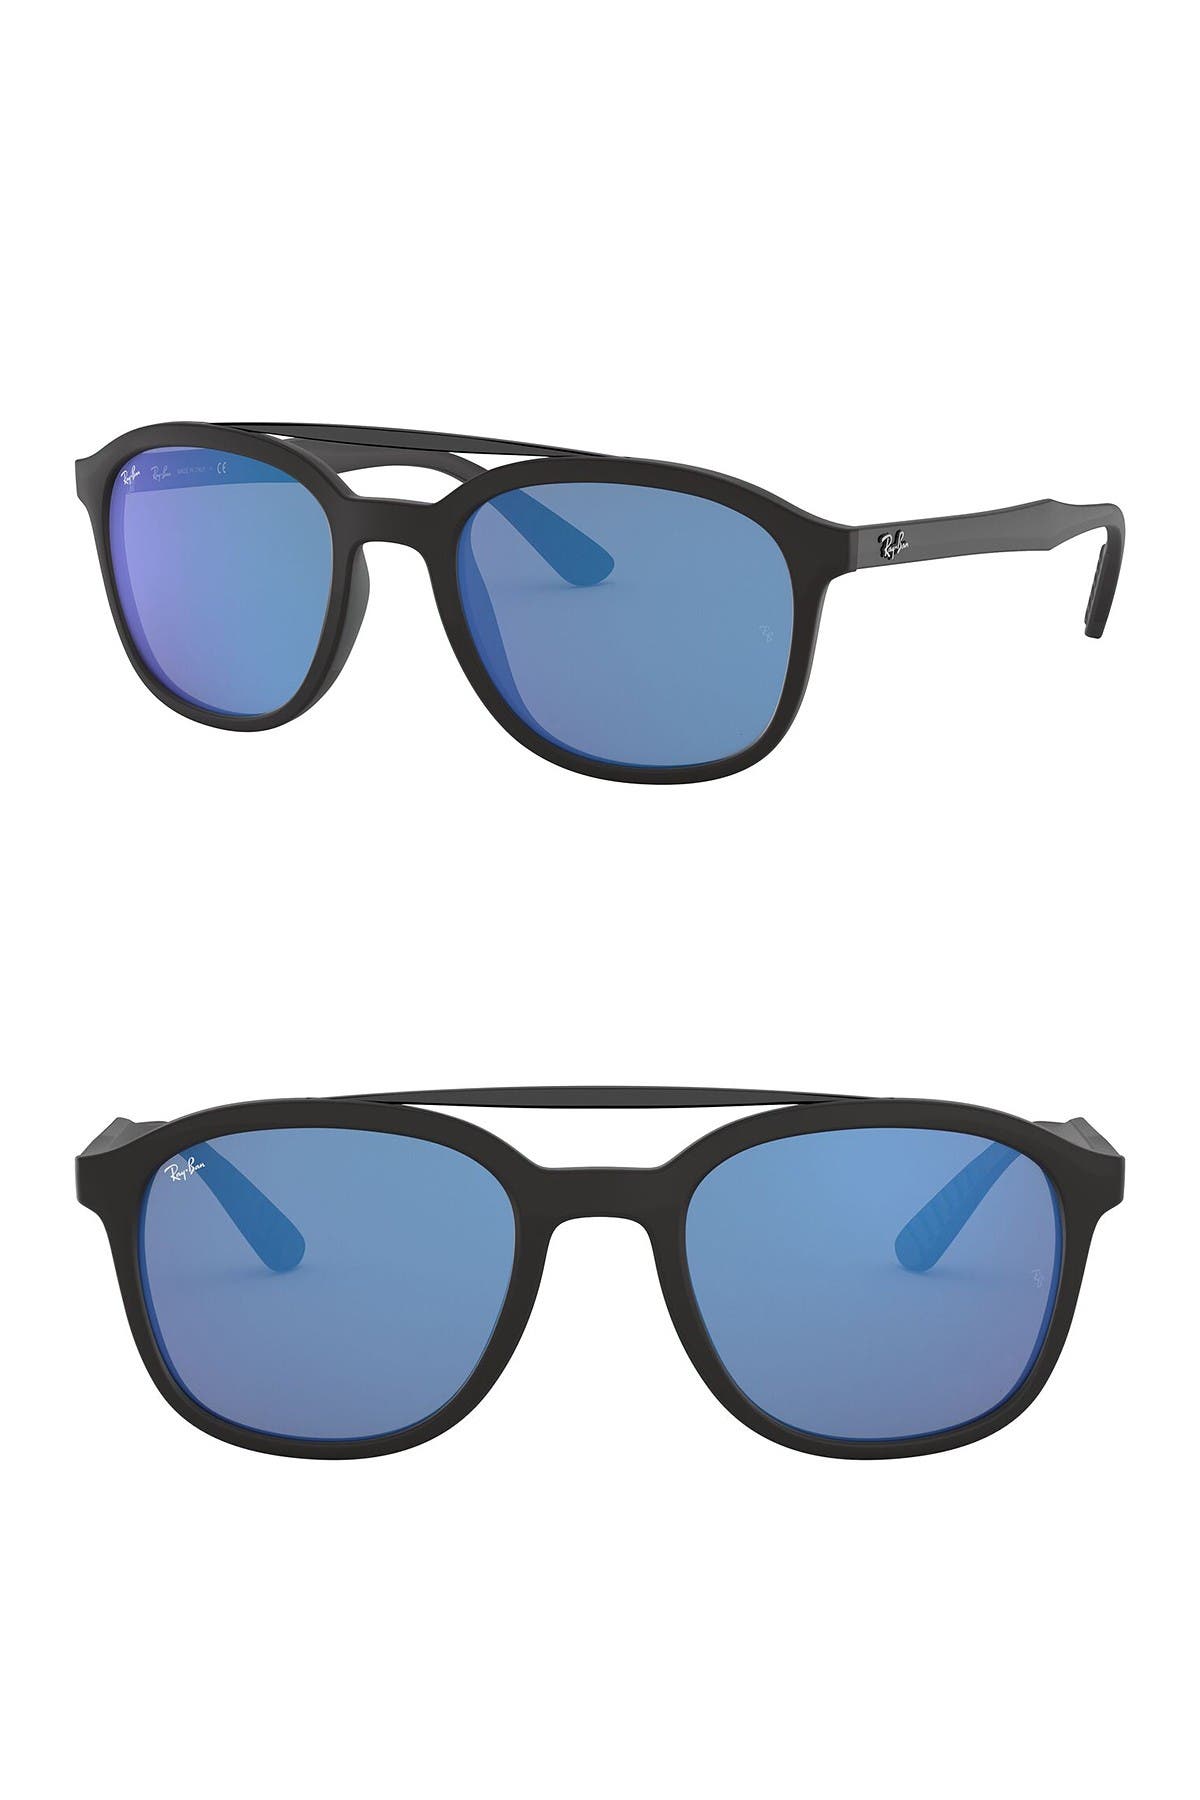 ray ban active square sunglasses